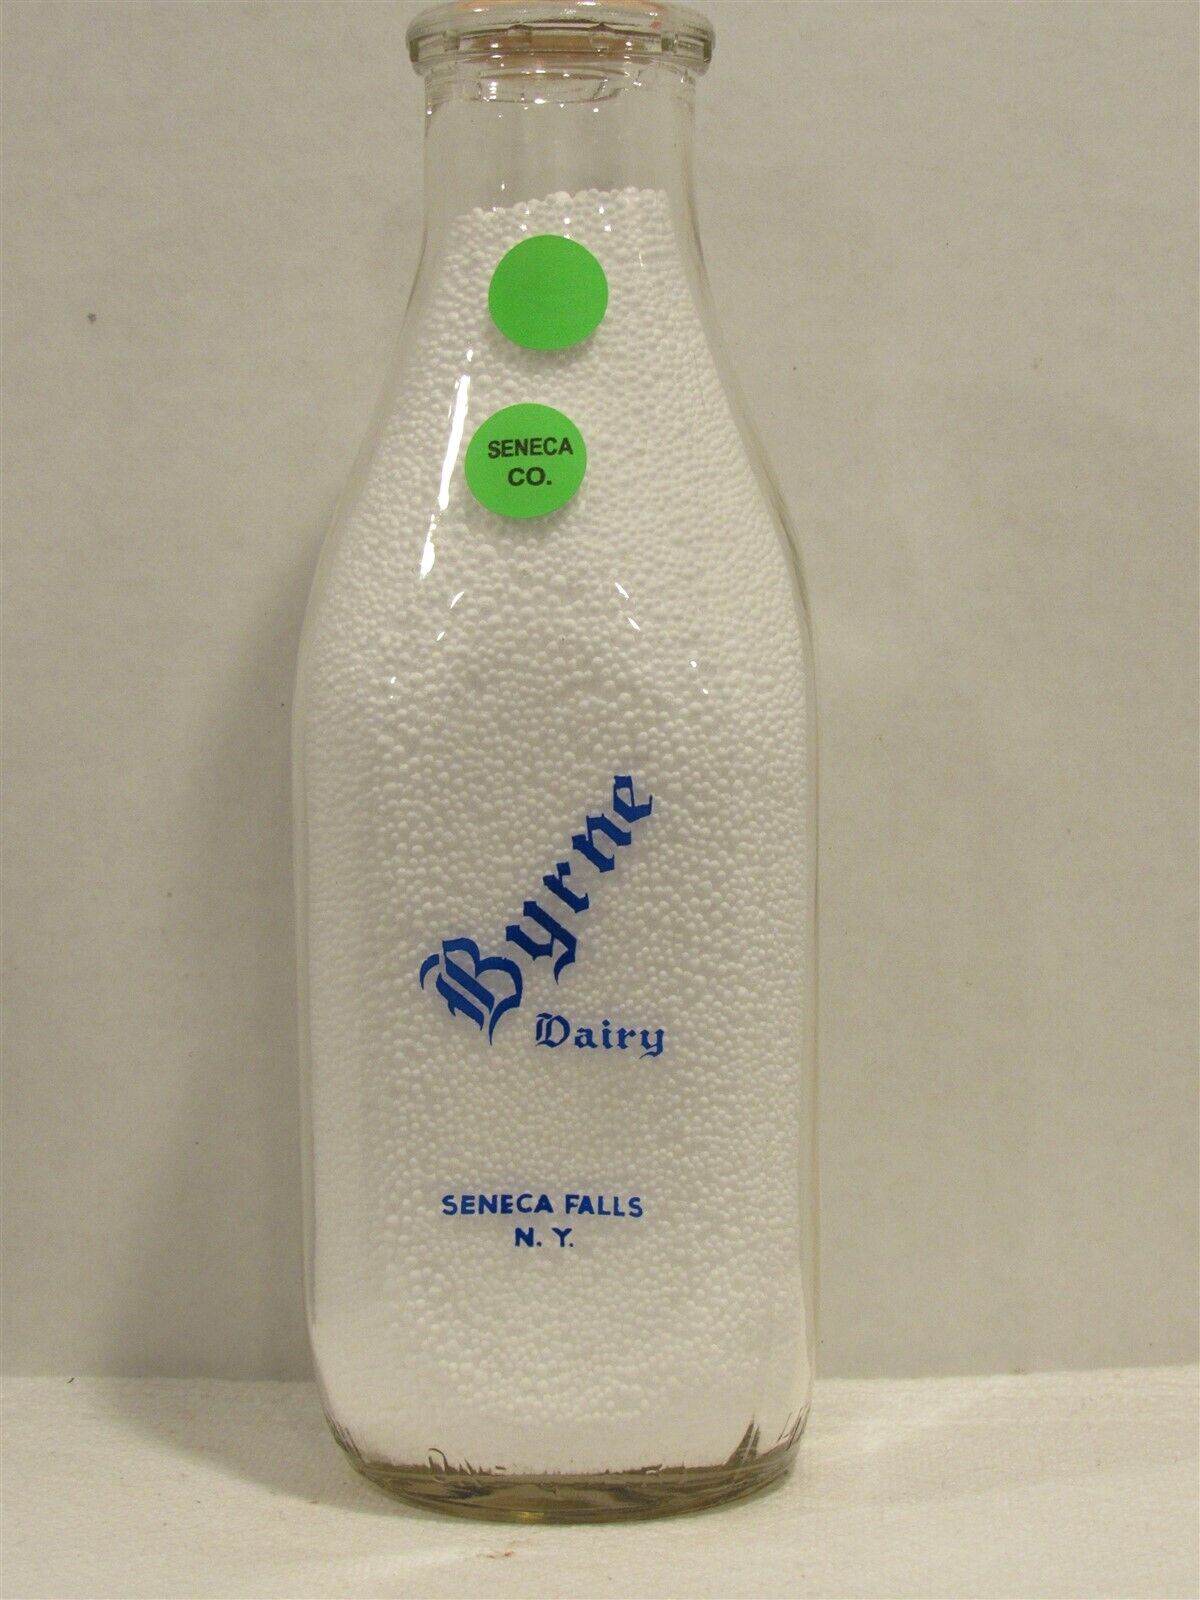 TSPQ Milk Bottle Byrne Dairy Seneca Falls NY SENECA COUNTY 1959 Baby Picture